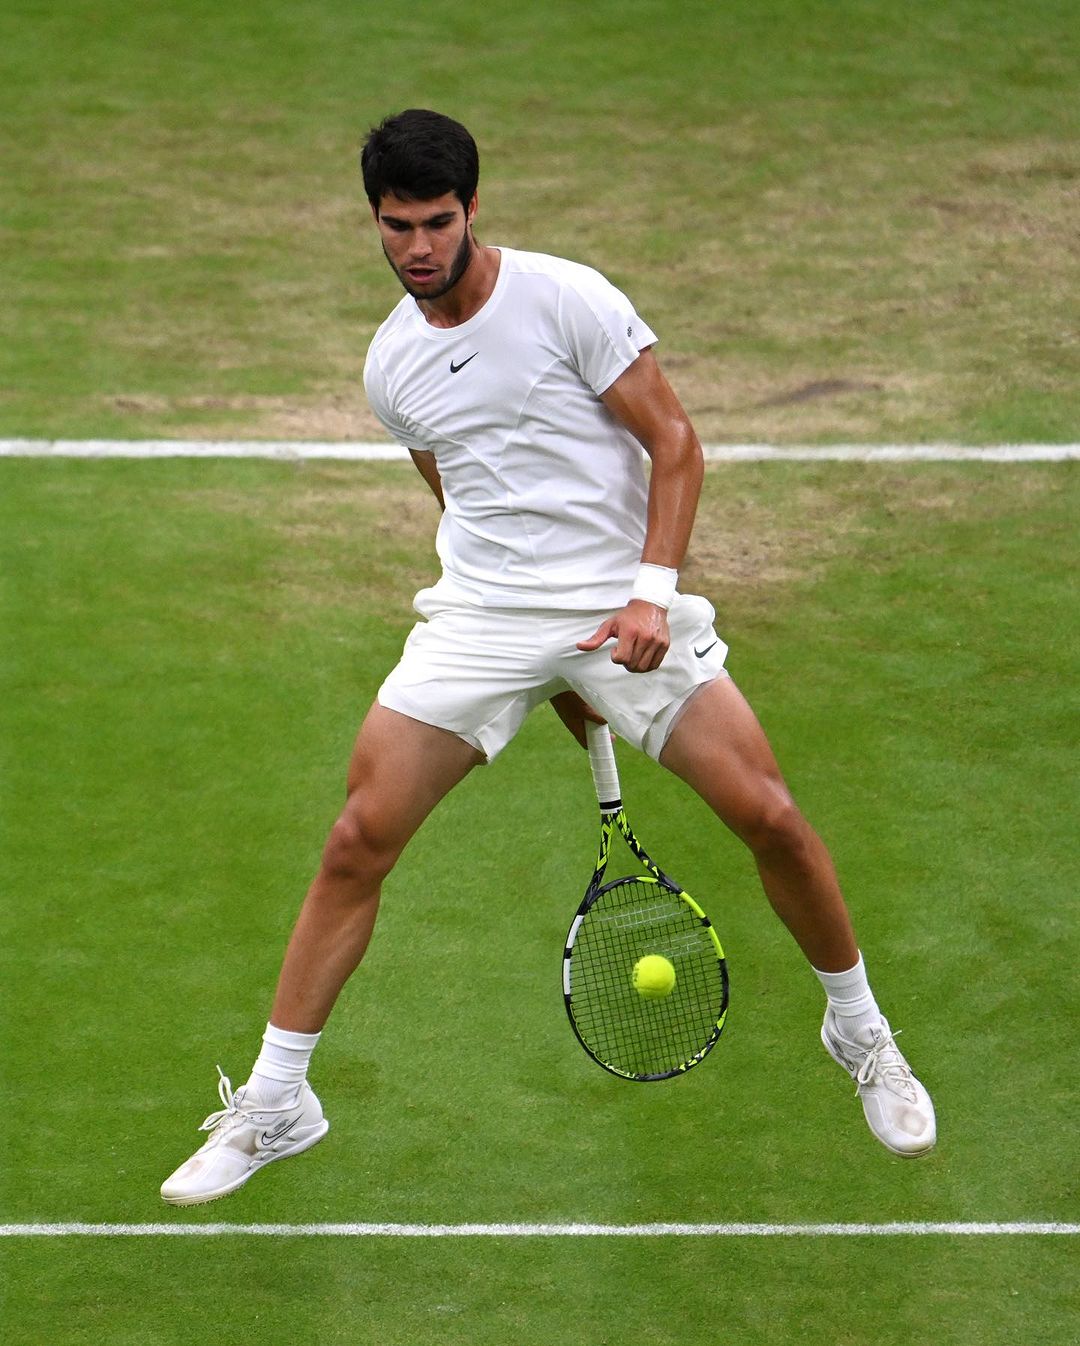 Alcaraz shines at Wimbledon